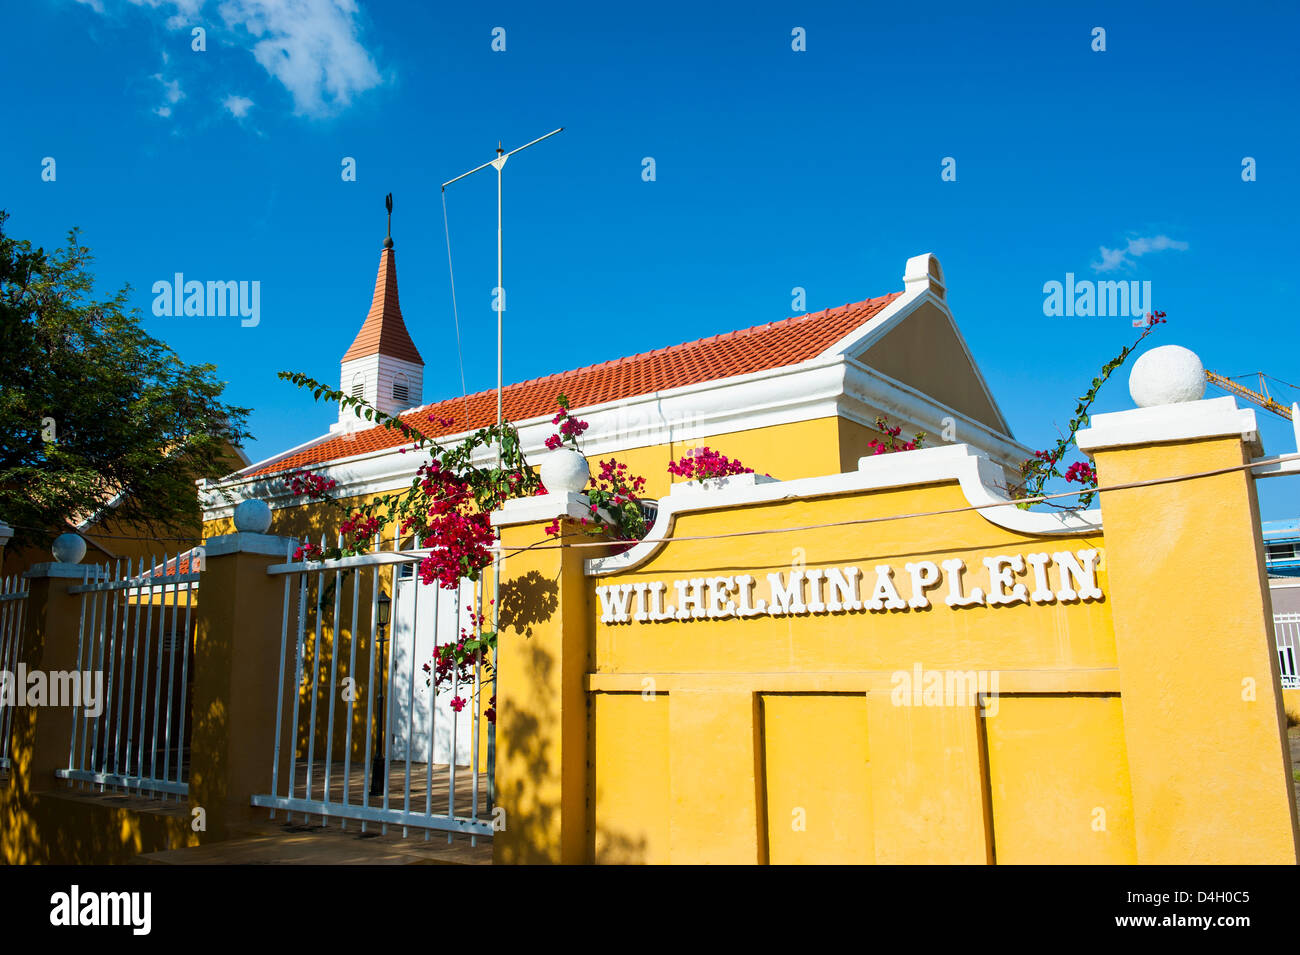 Architettura Olandese in Kralendijk capitale di Bonaire, ABC, isole Antille Olandesi, dei Caraibi Foto Stock